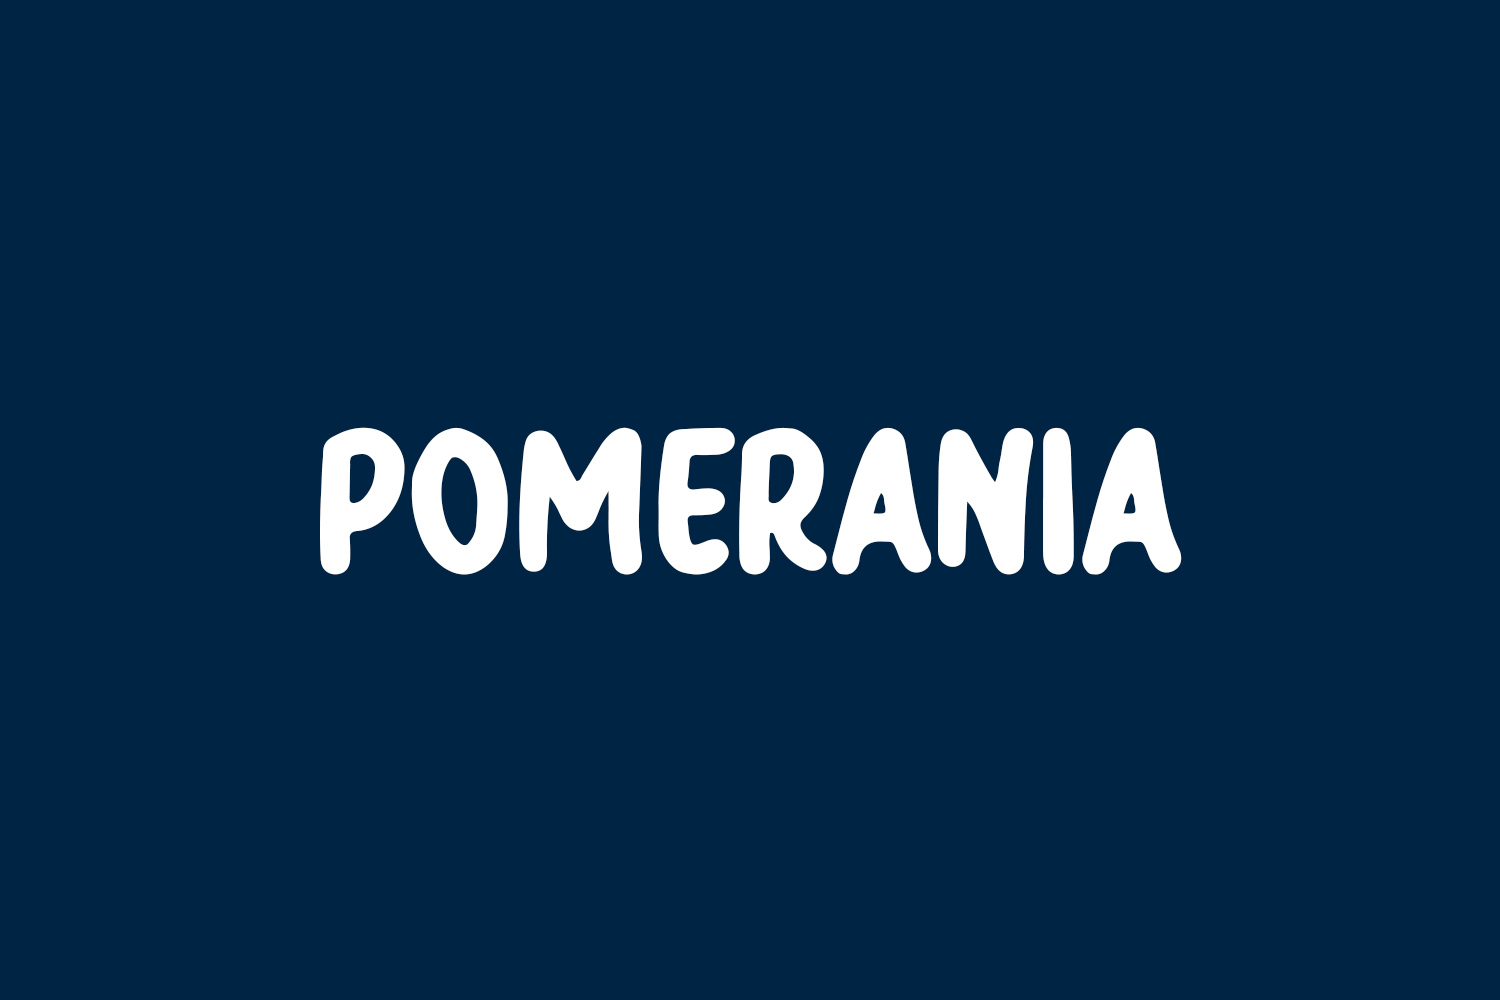 Pomerania Free Font